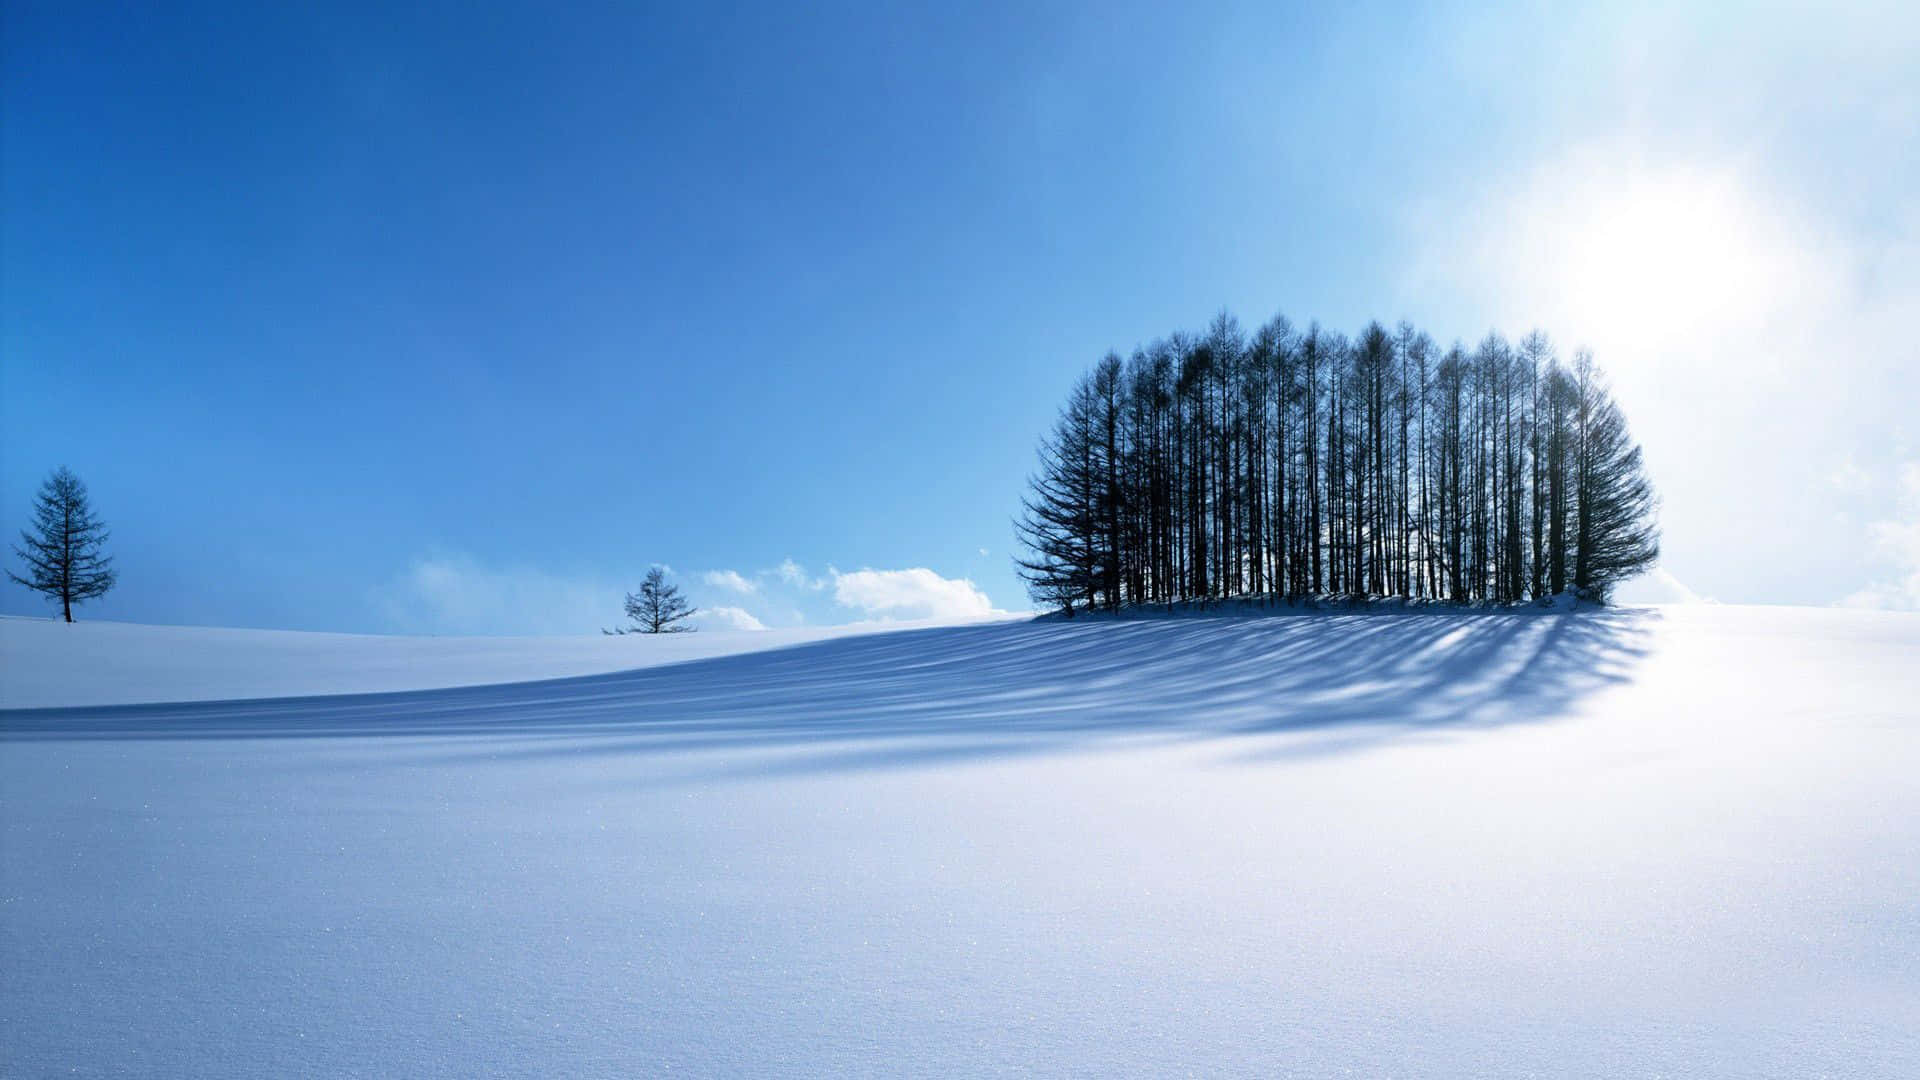 Enjoy the Peaceful Beauty of a Winter Landscape